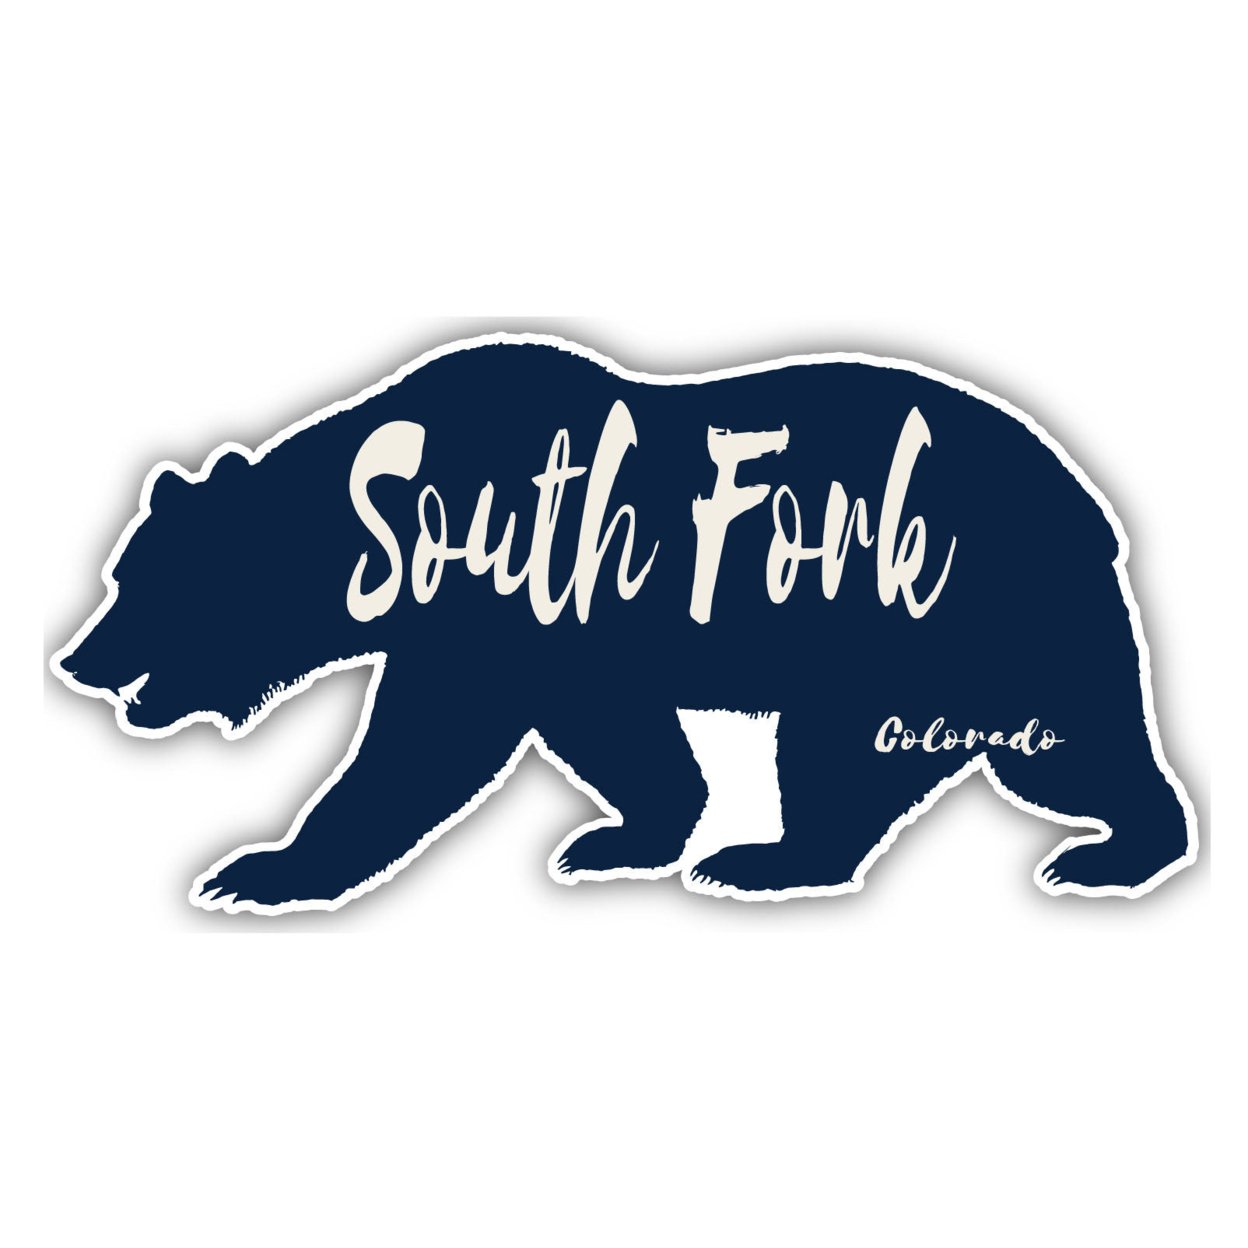 South Fork Colorado Souvenir Decorative Stickers (Choose Theme And Size) - Single Unit, 4-Inch, Camp Life